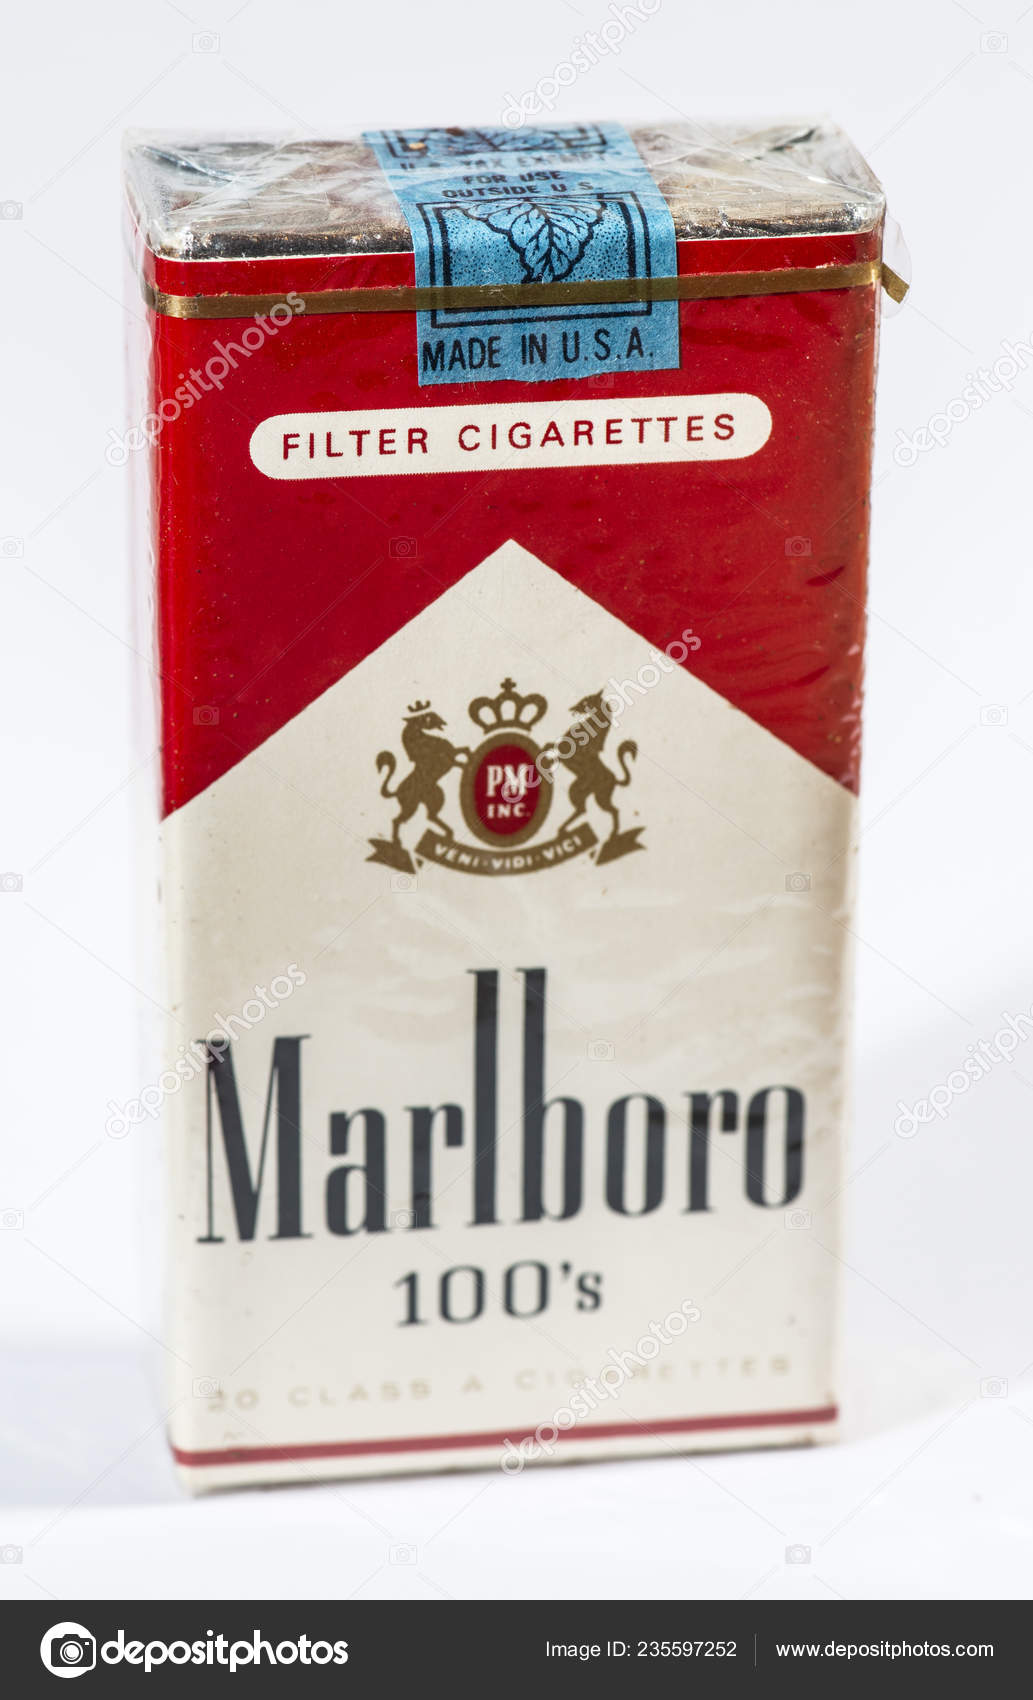 Types Of Marlboro Cigarettes In Singapore - roommotors